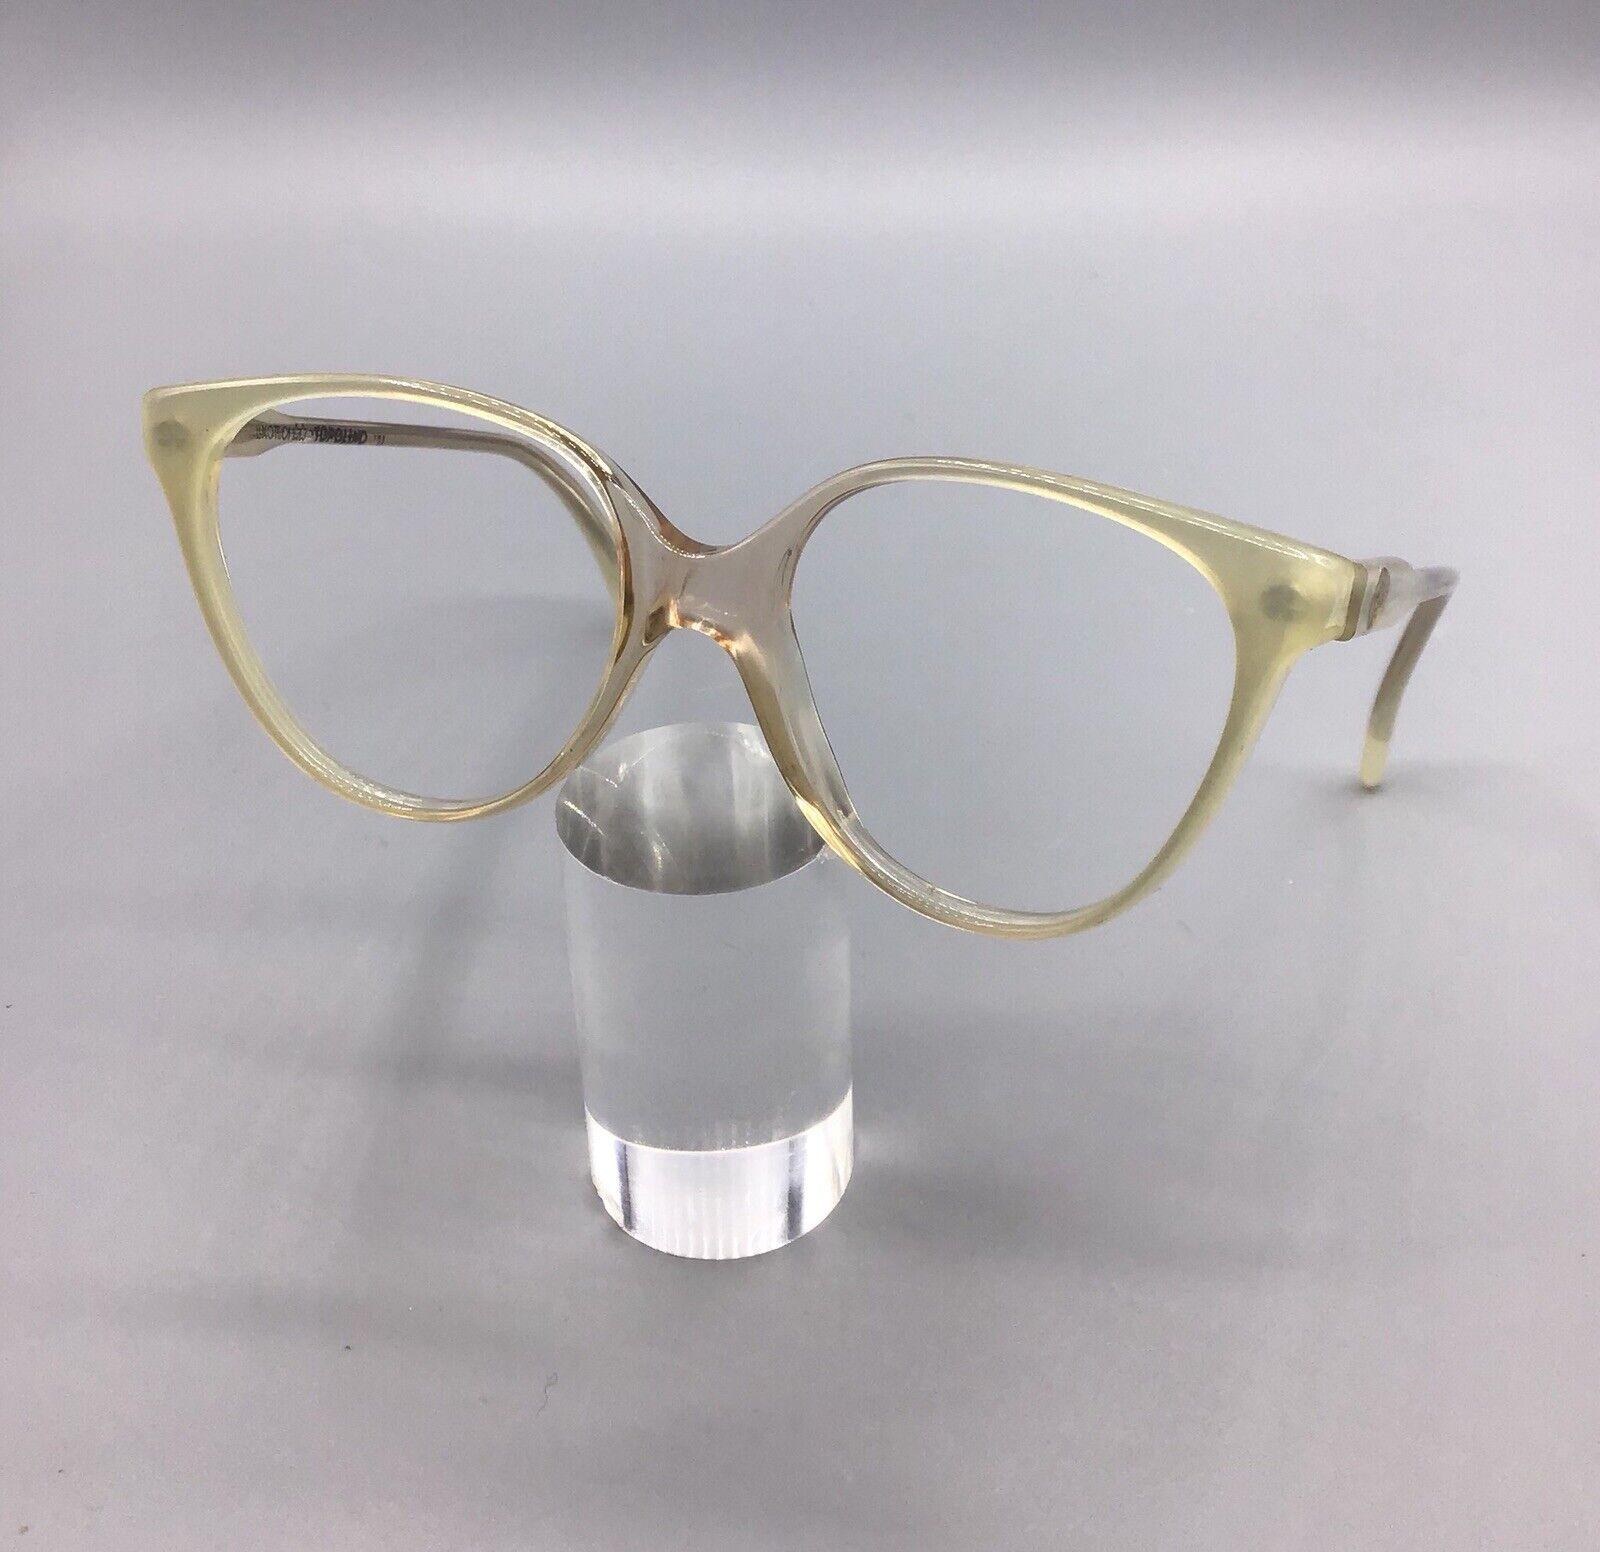 Luxottica occhiale vintage eyewear frame L26 topolino frame brillen lunettes